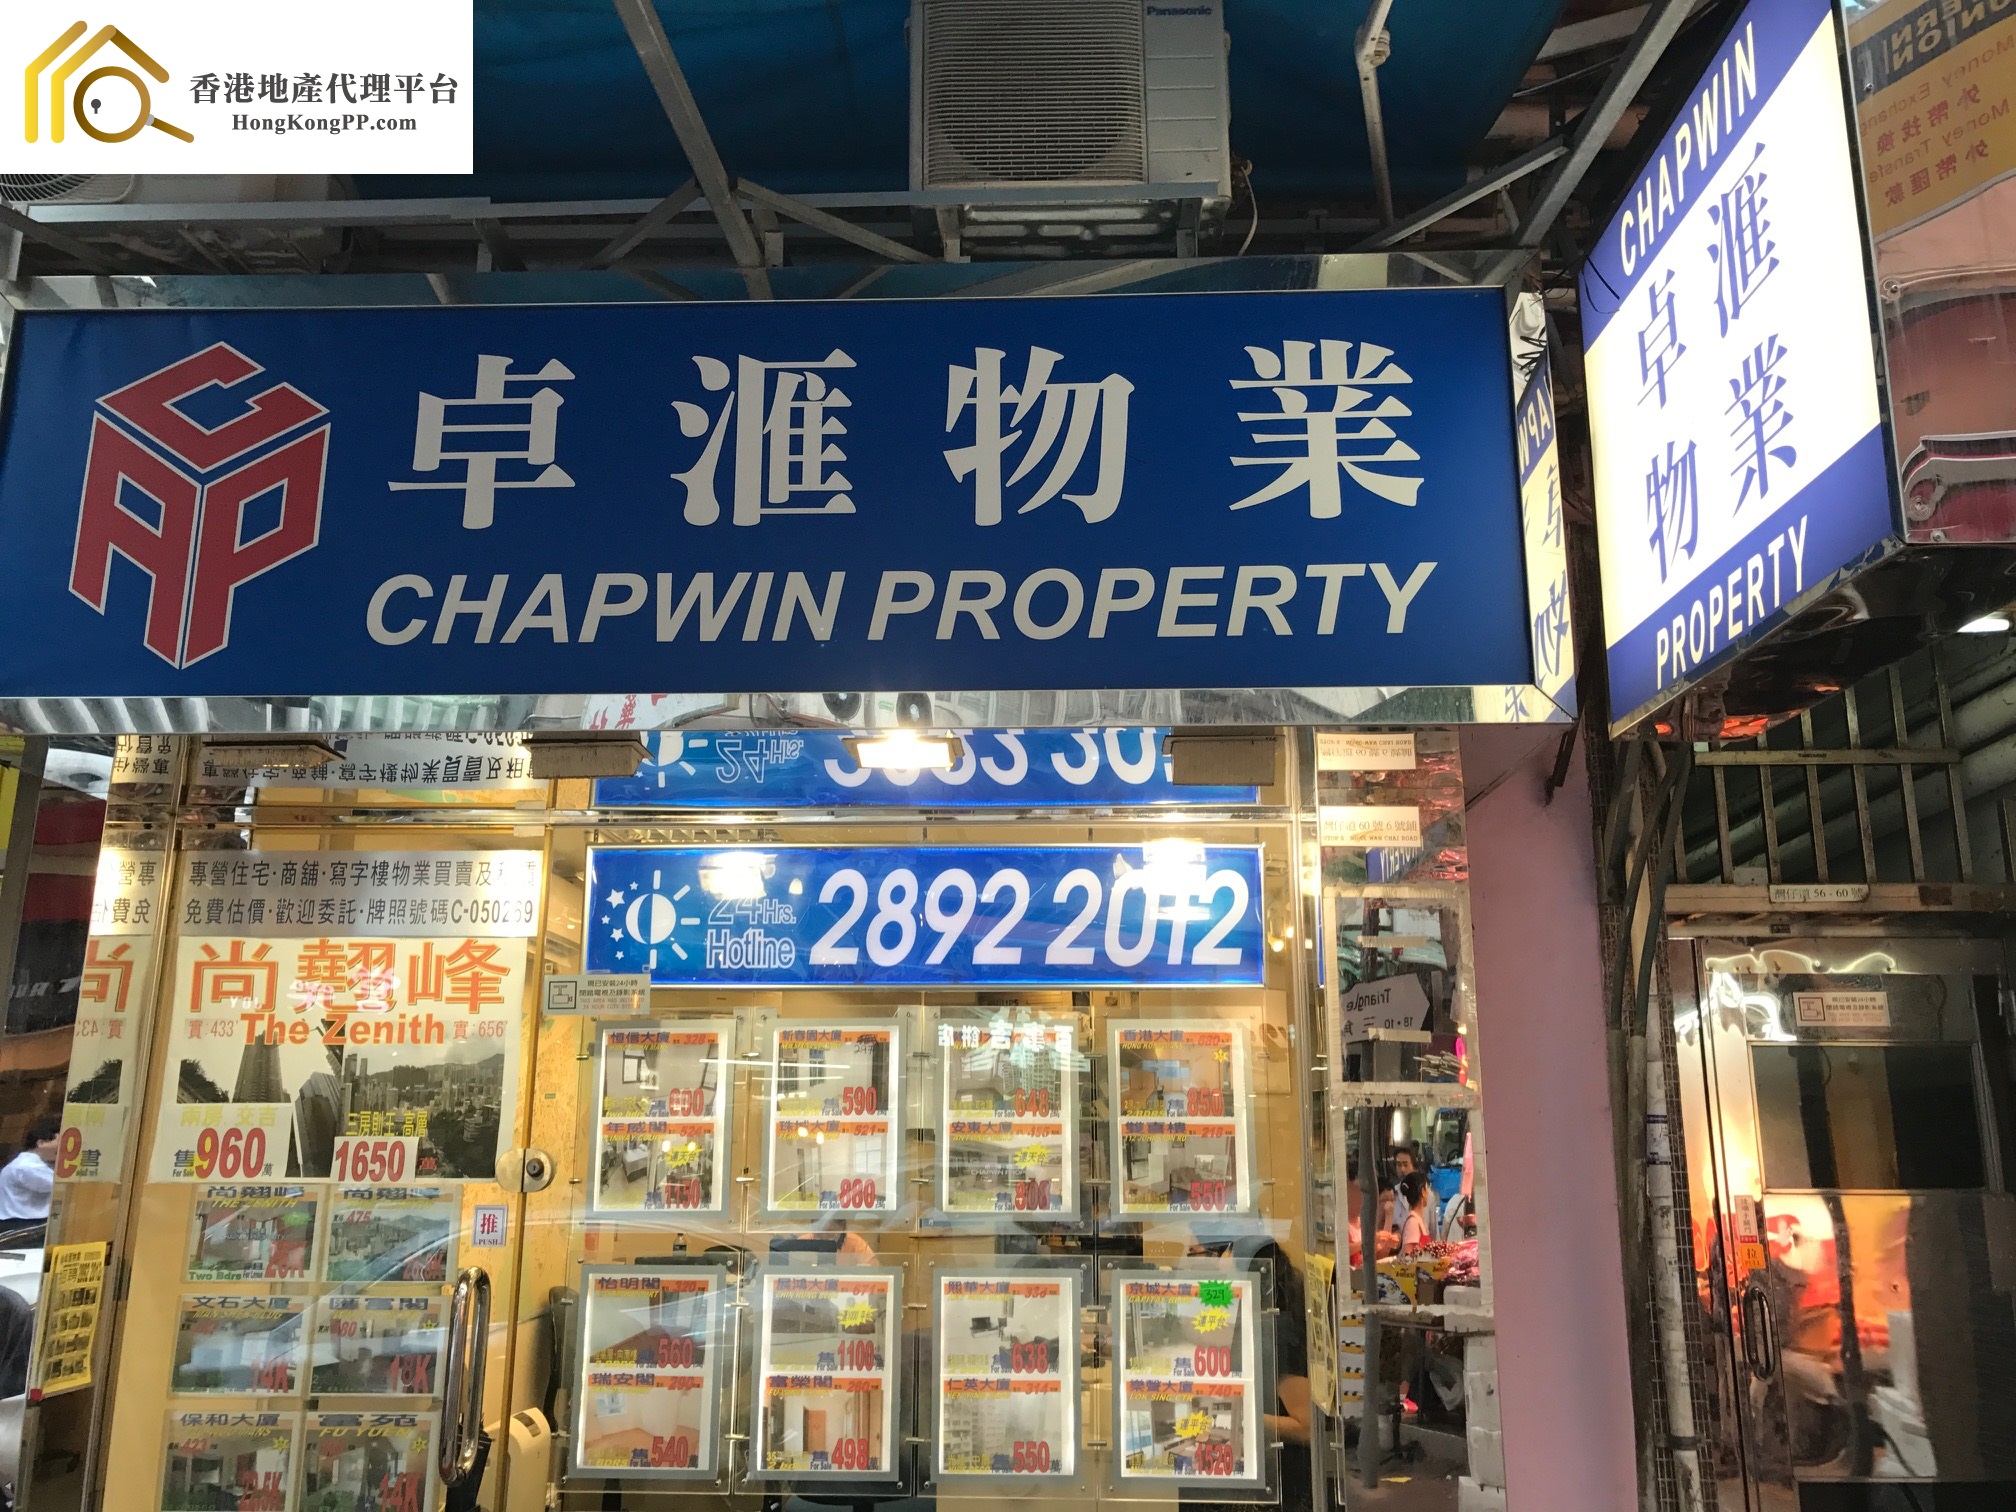 CarparkEstate Agent: 卓匯物業 Chapwin Property Agency